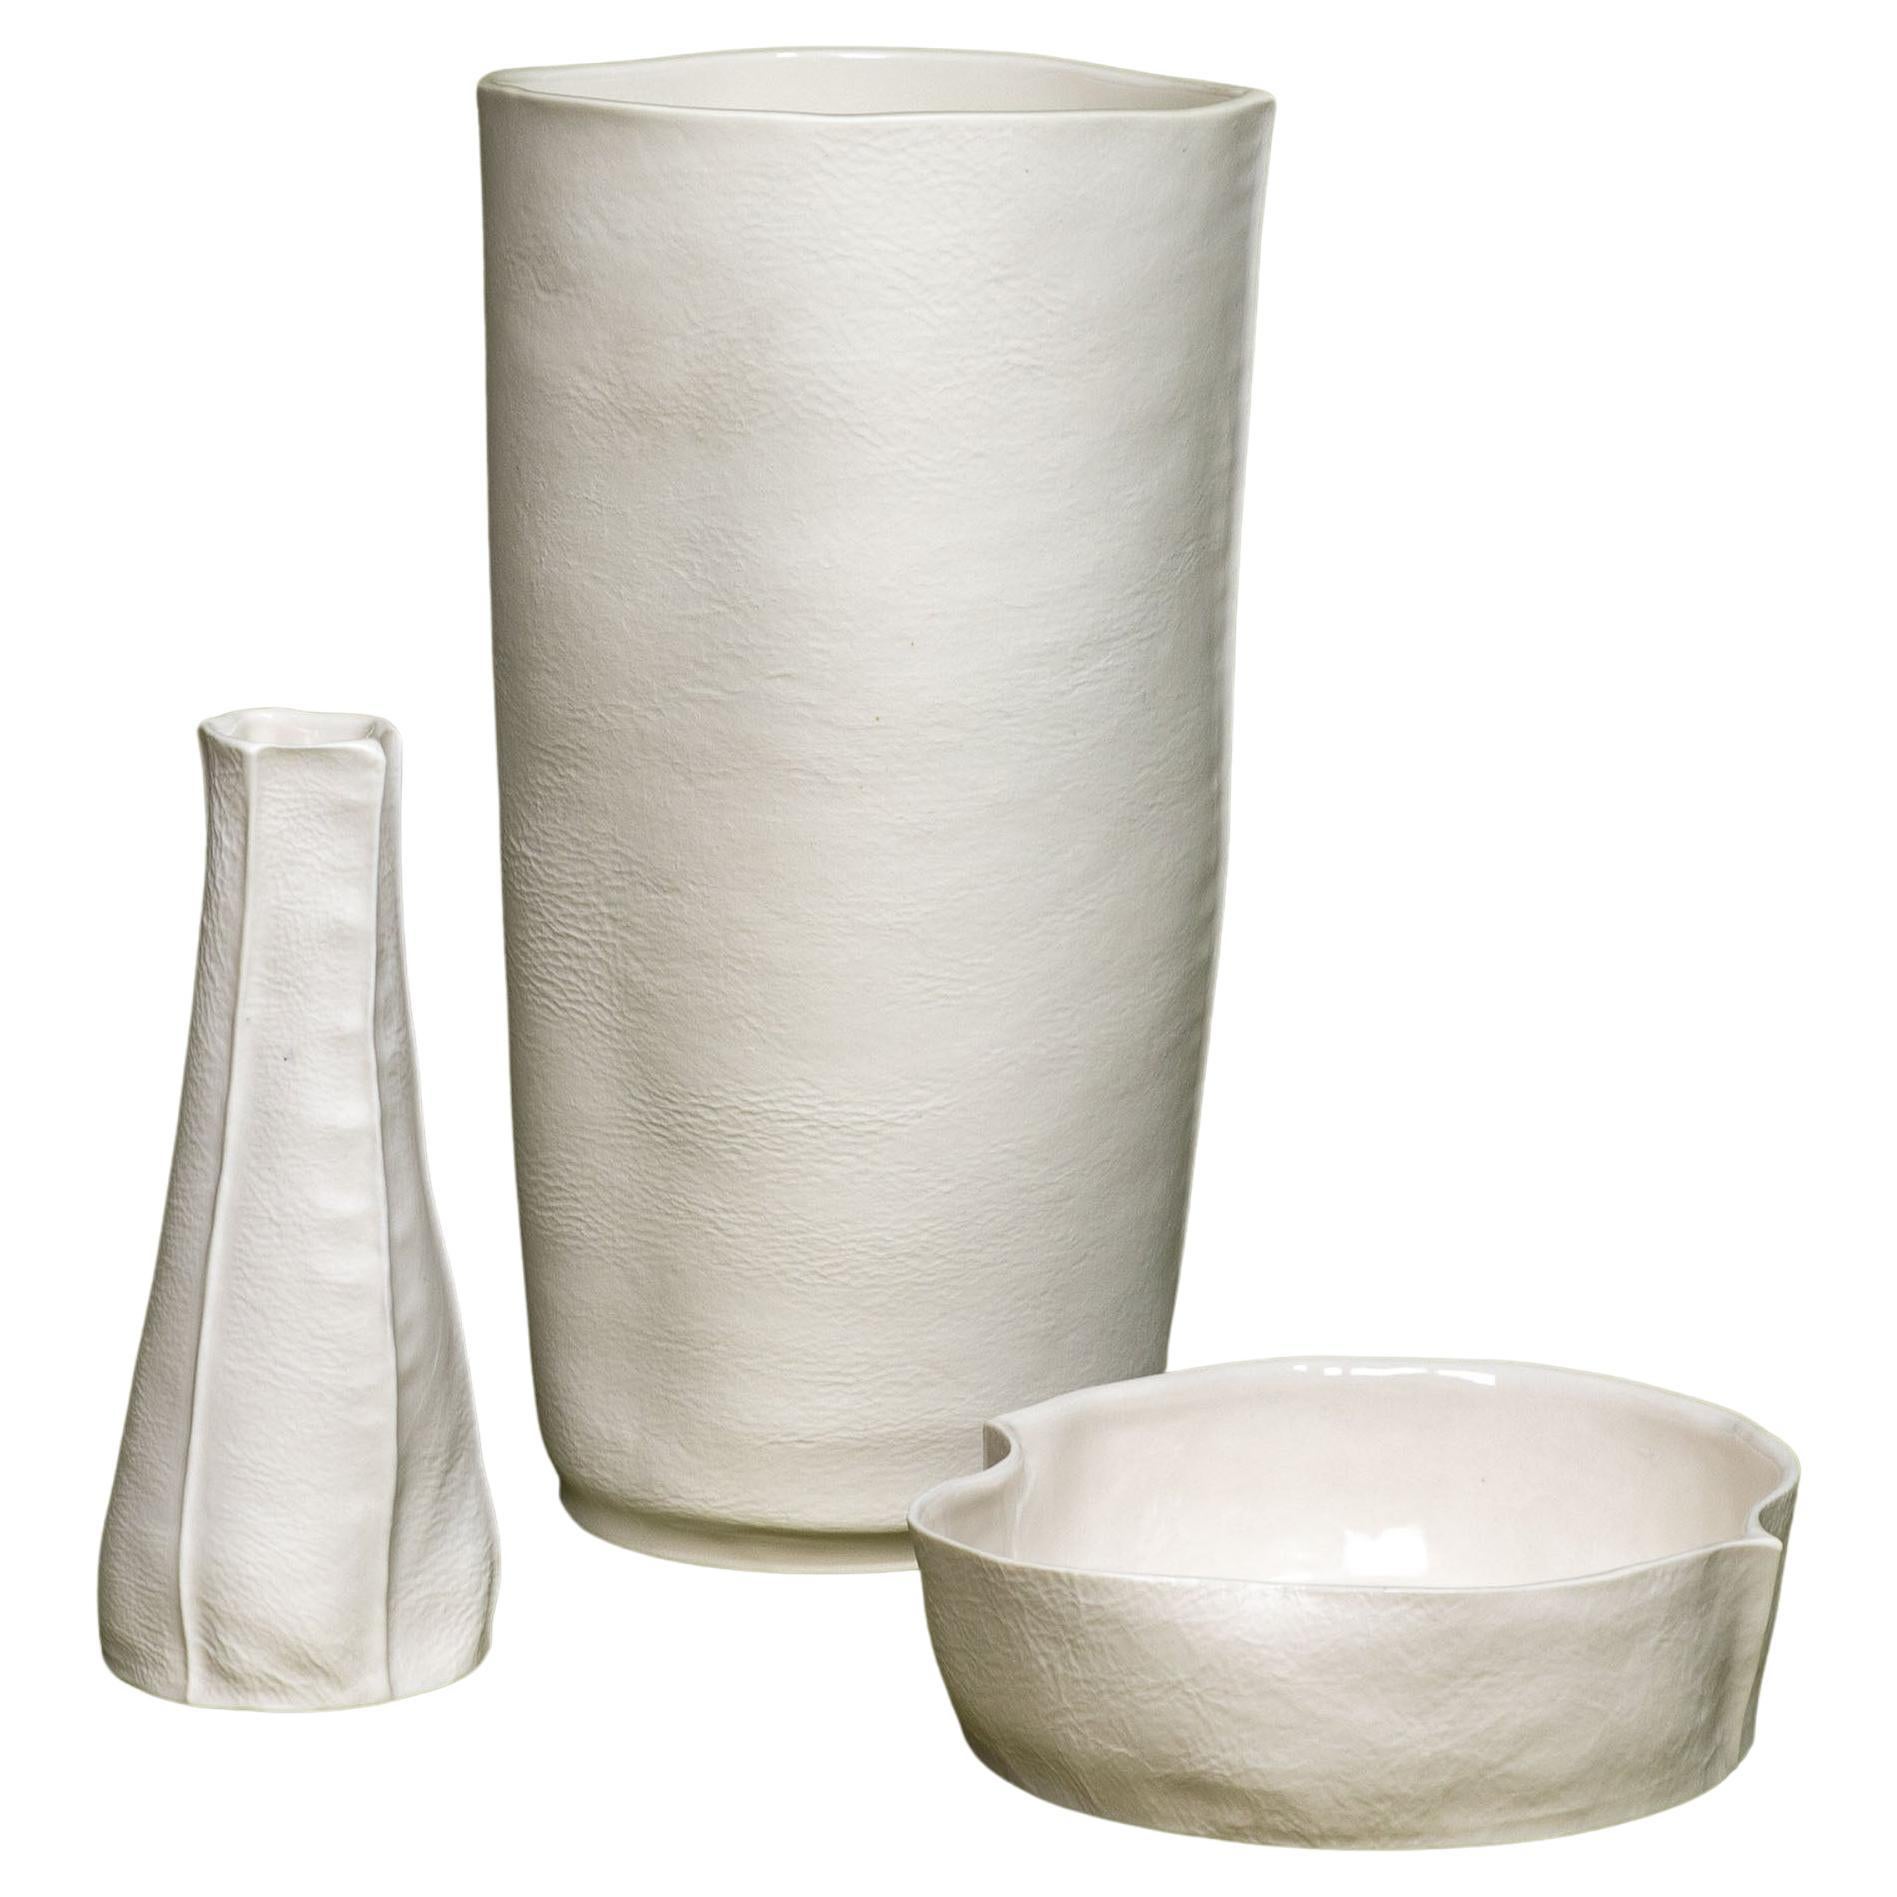 In-Stock, Set of 3 White Ceramic Vases & Dish, Luft Tanaka, Porcelain, Organic